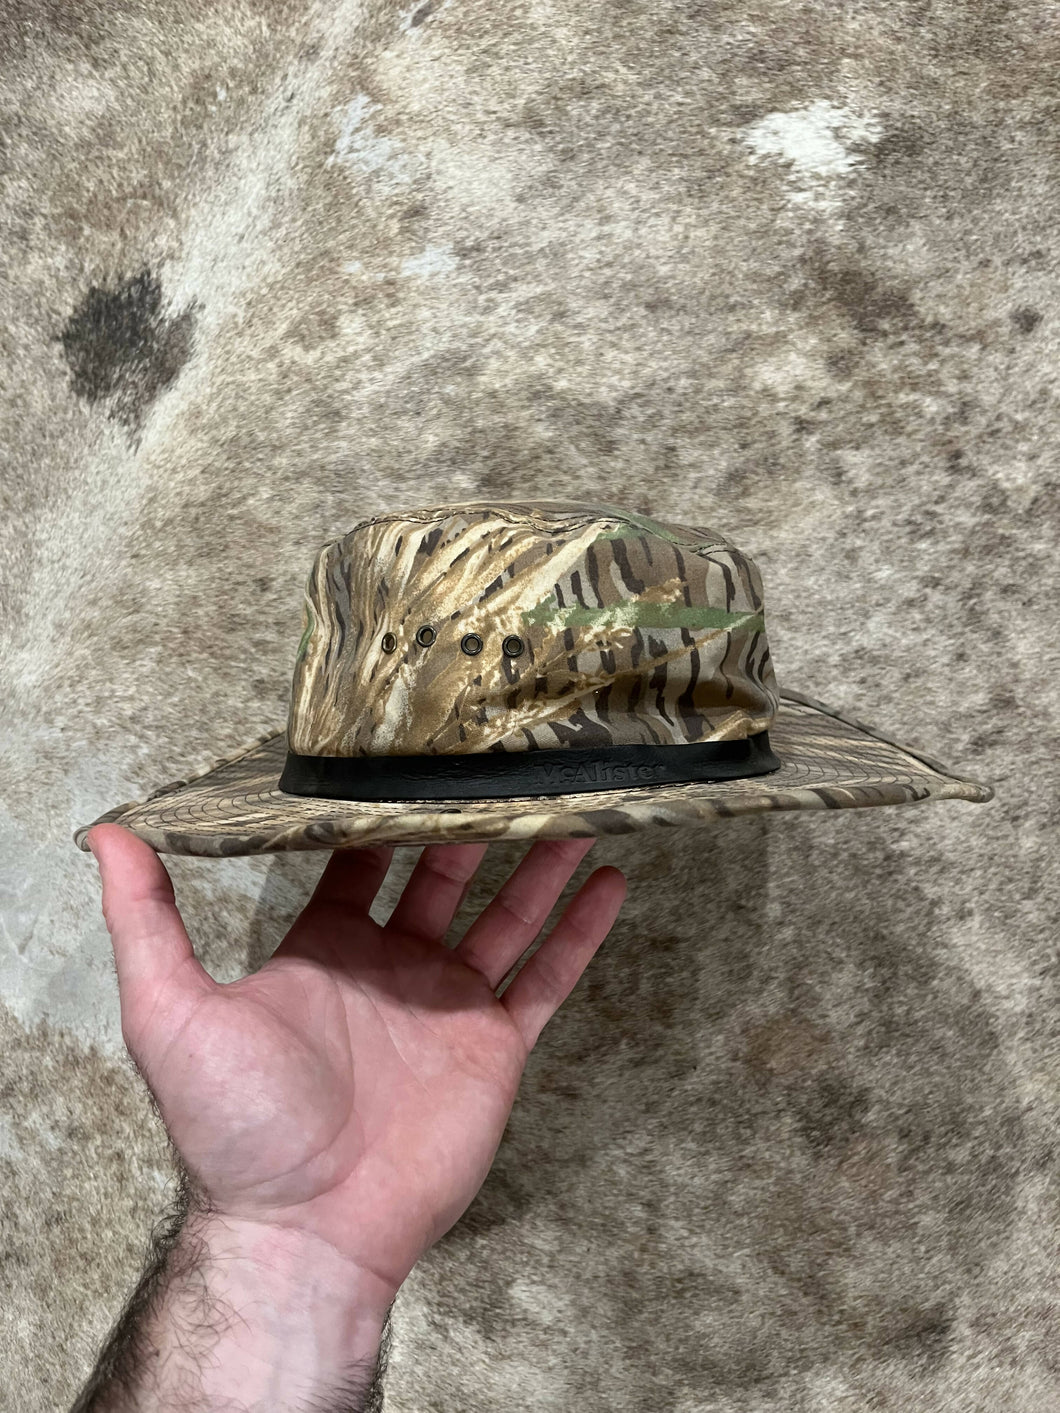 McAlister Mossy Oak Shadow Grass Wide Brim Hat Large 🇺🇸